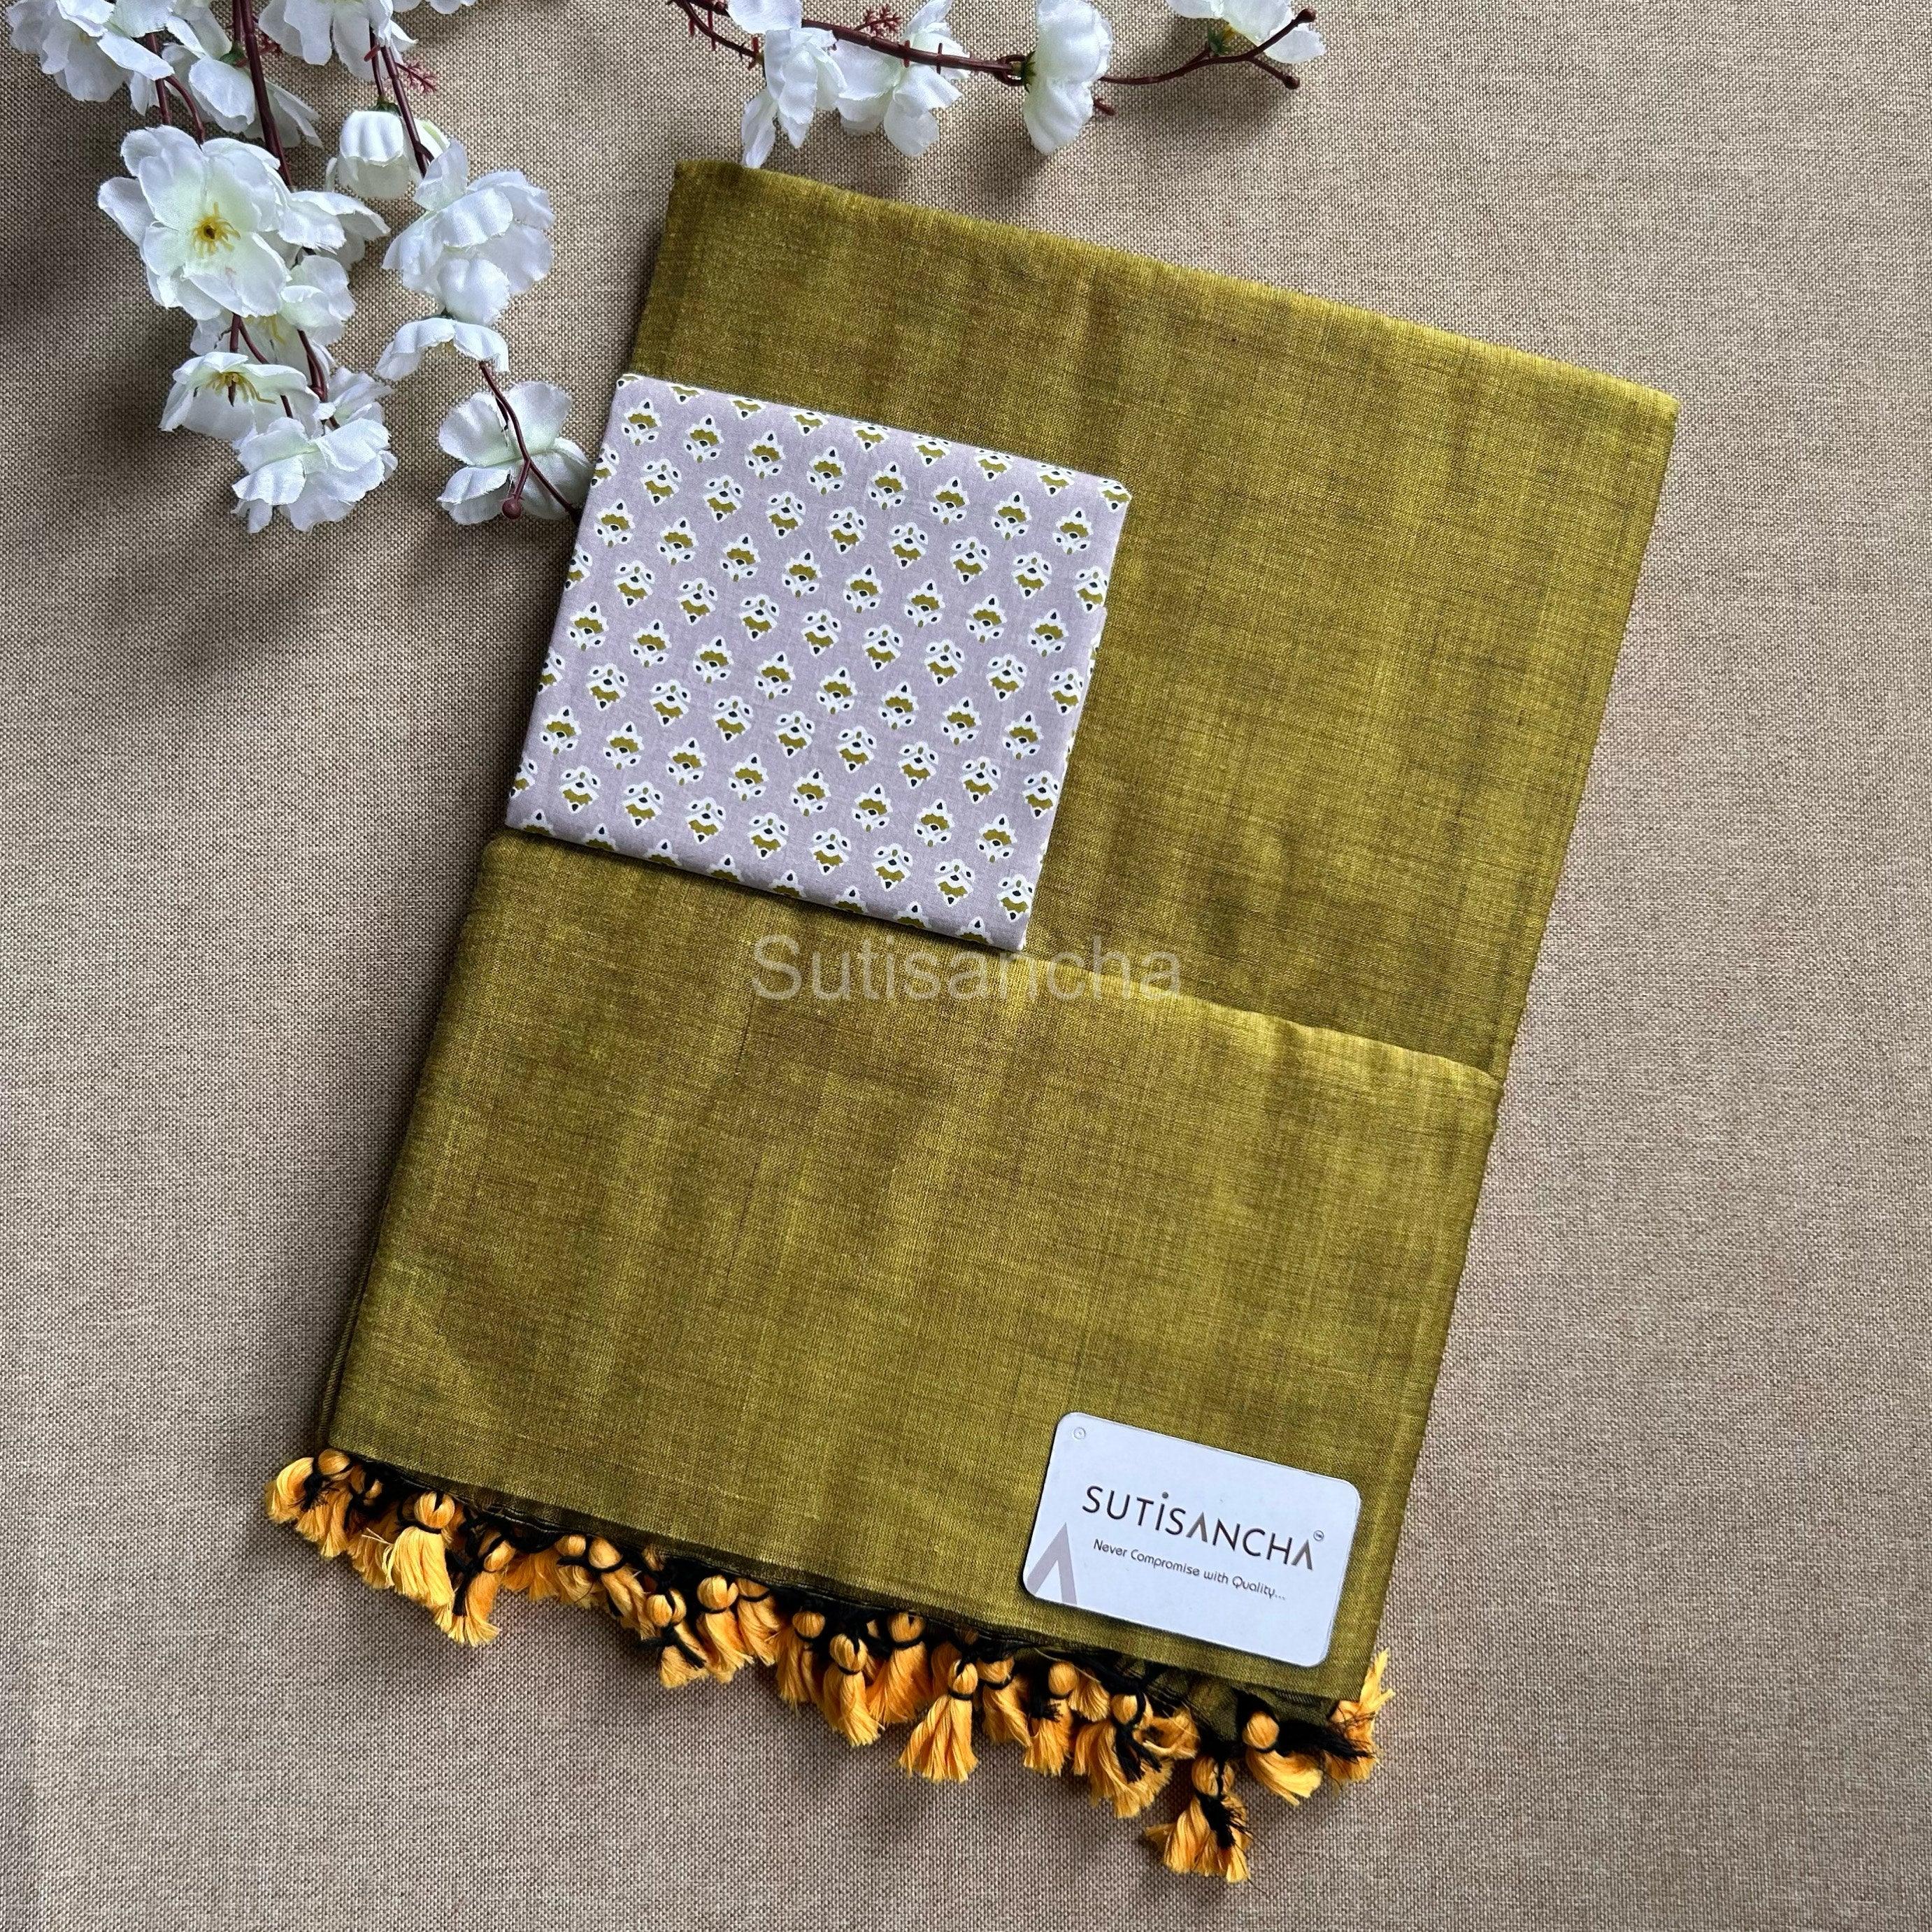 Sutisancha Olive Colour Handloom Cotton saree - Suti Sancha